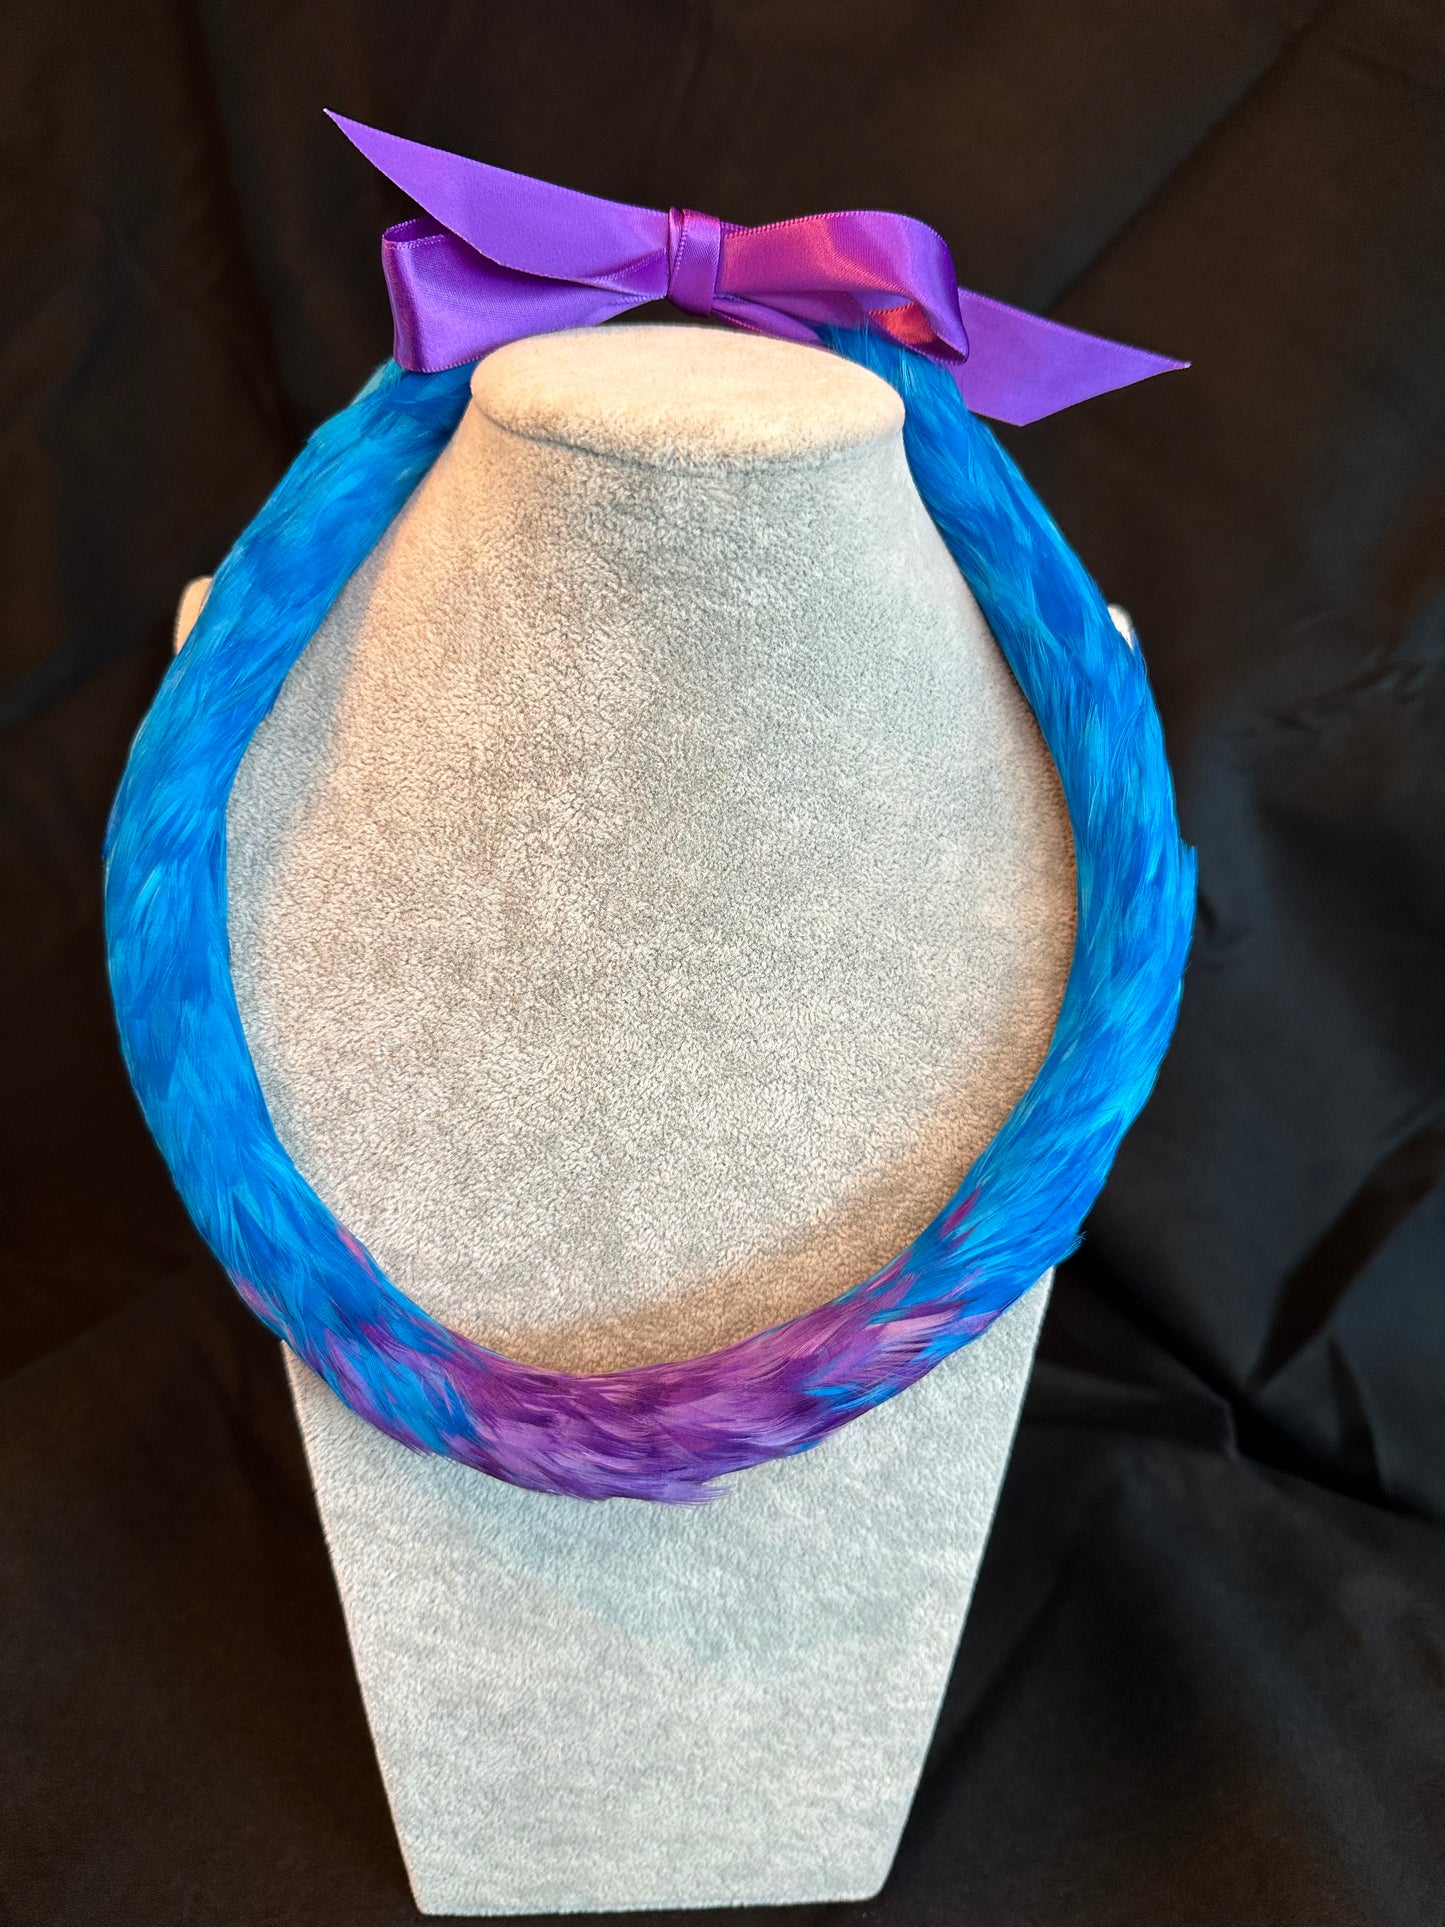 24" Turquoise with purple 2nd cut lei hulu (feather lei)